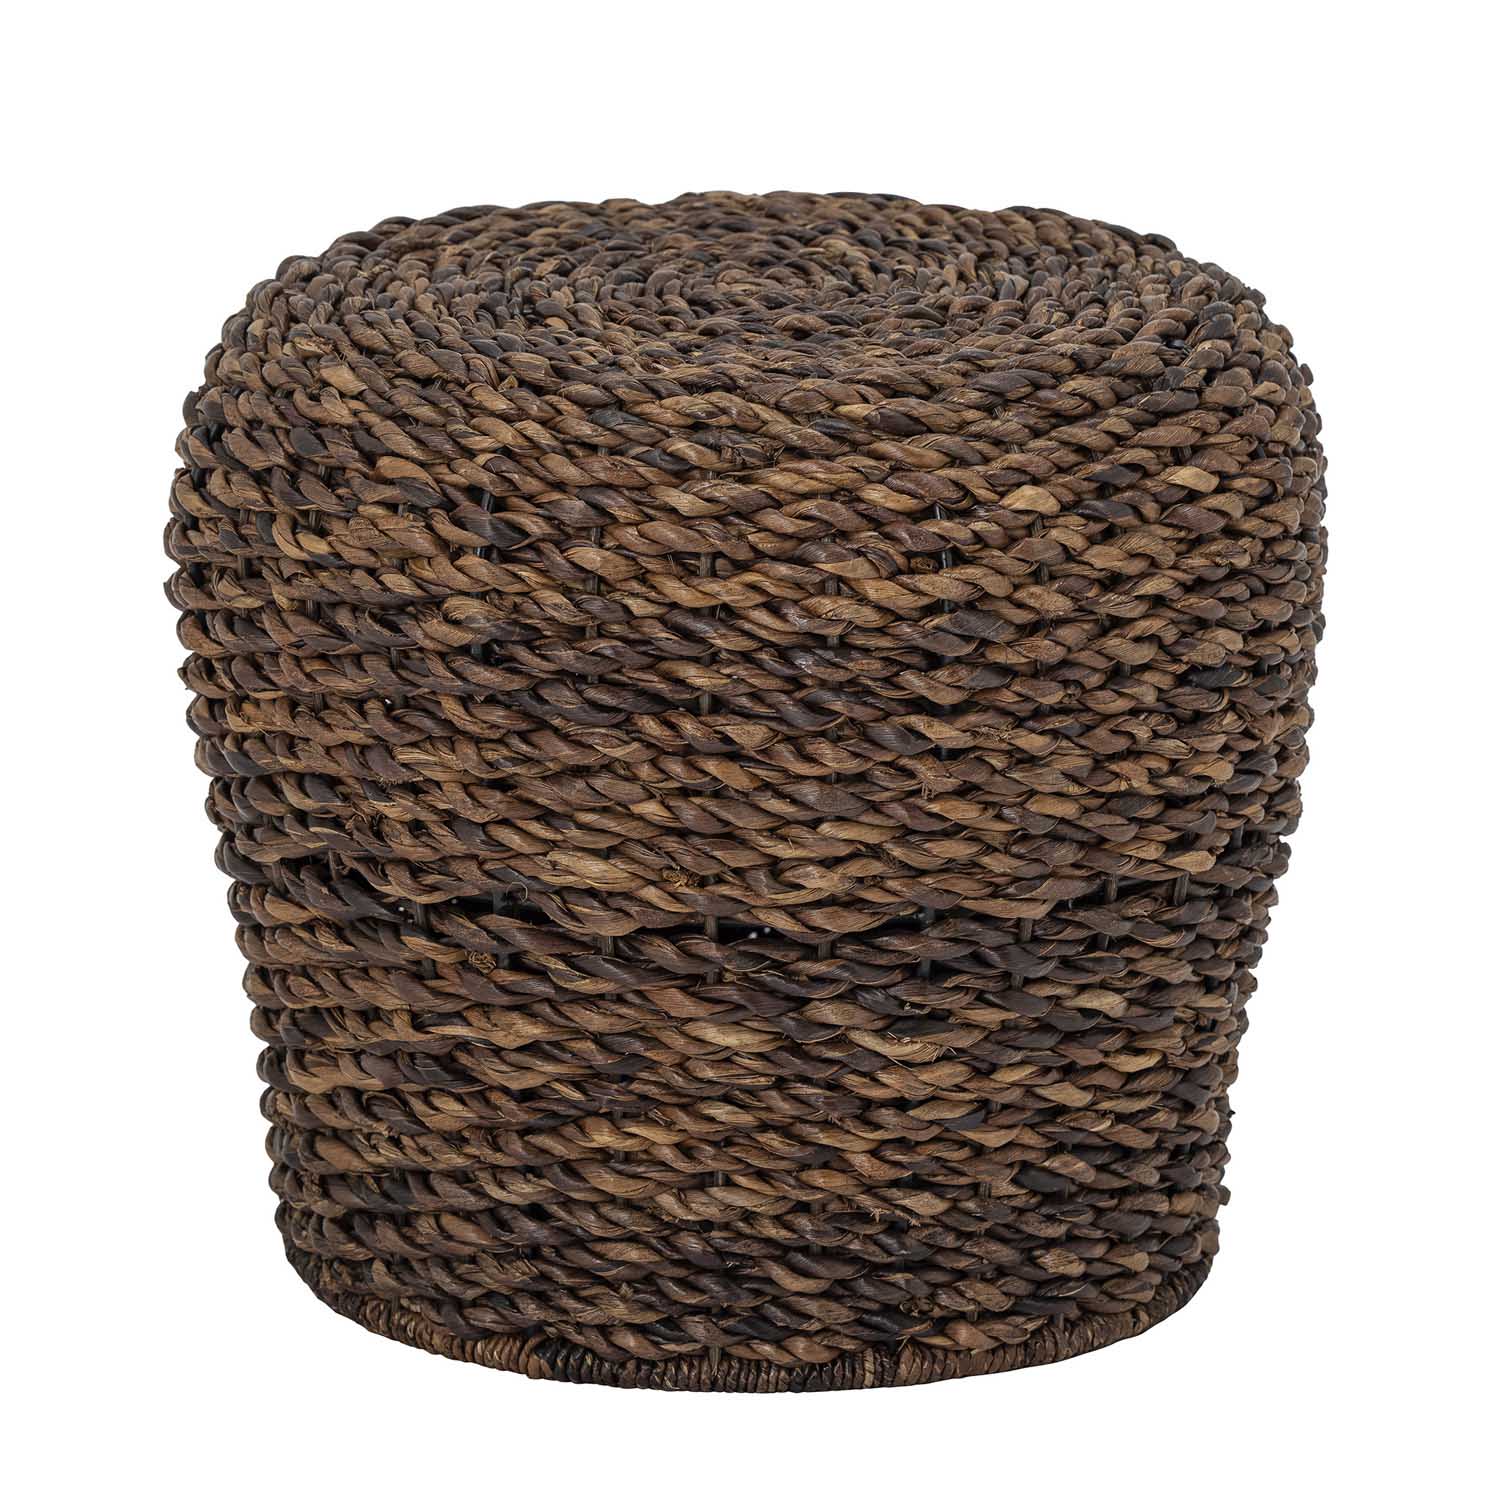 CREATIVE COLLECTION Tasse taburet - brun abaca